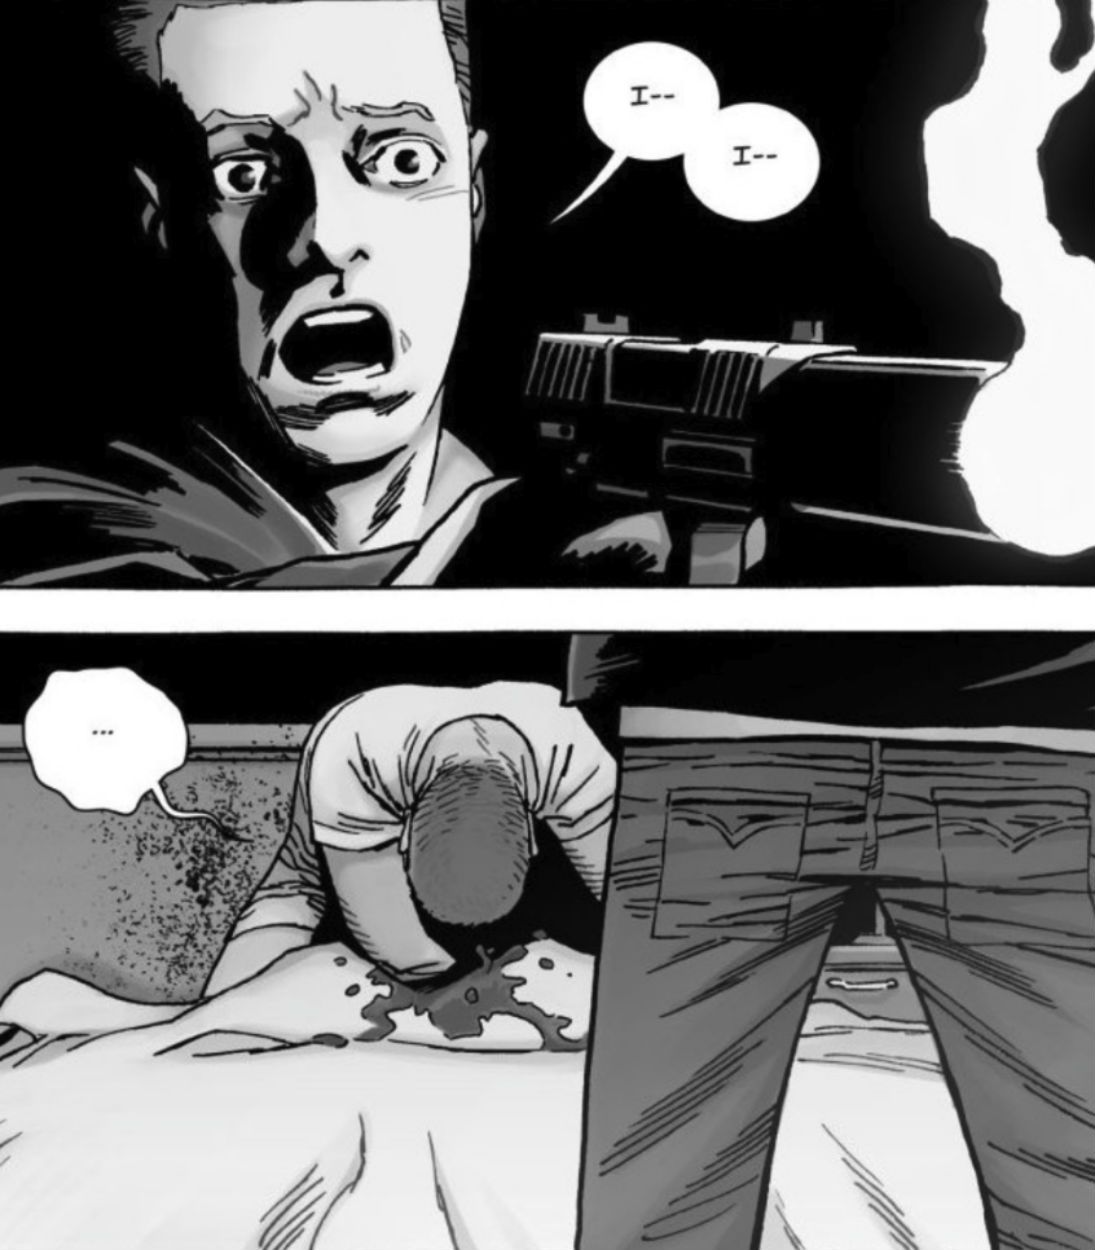 Sebastian shoots Rick in The Walking Dead comics